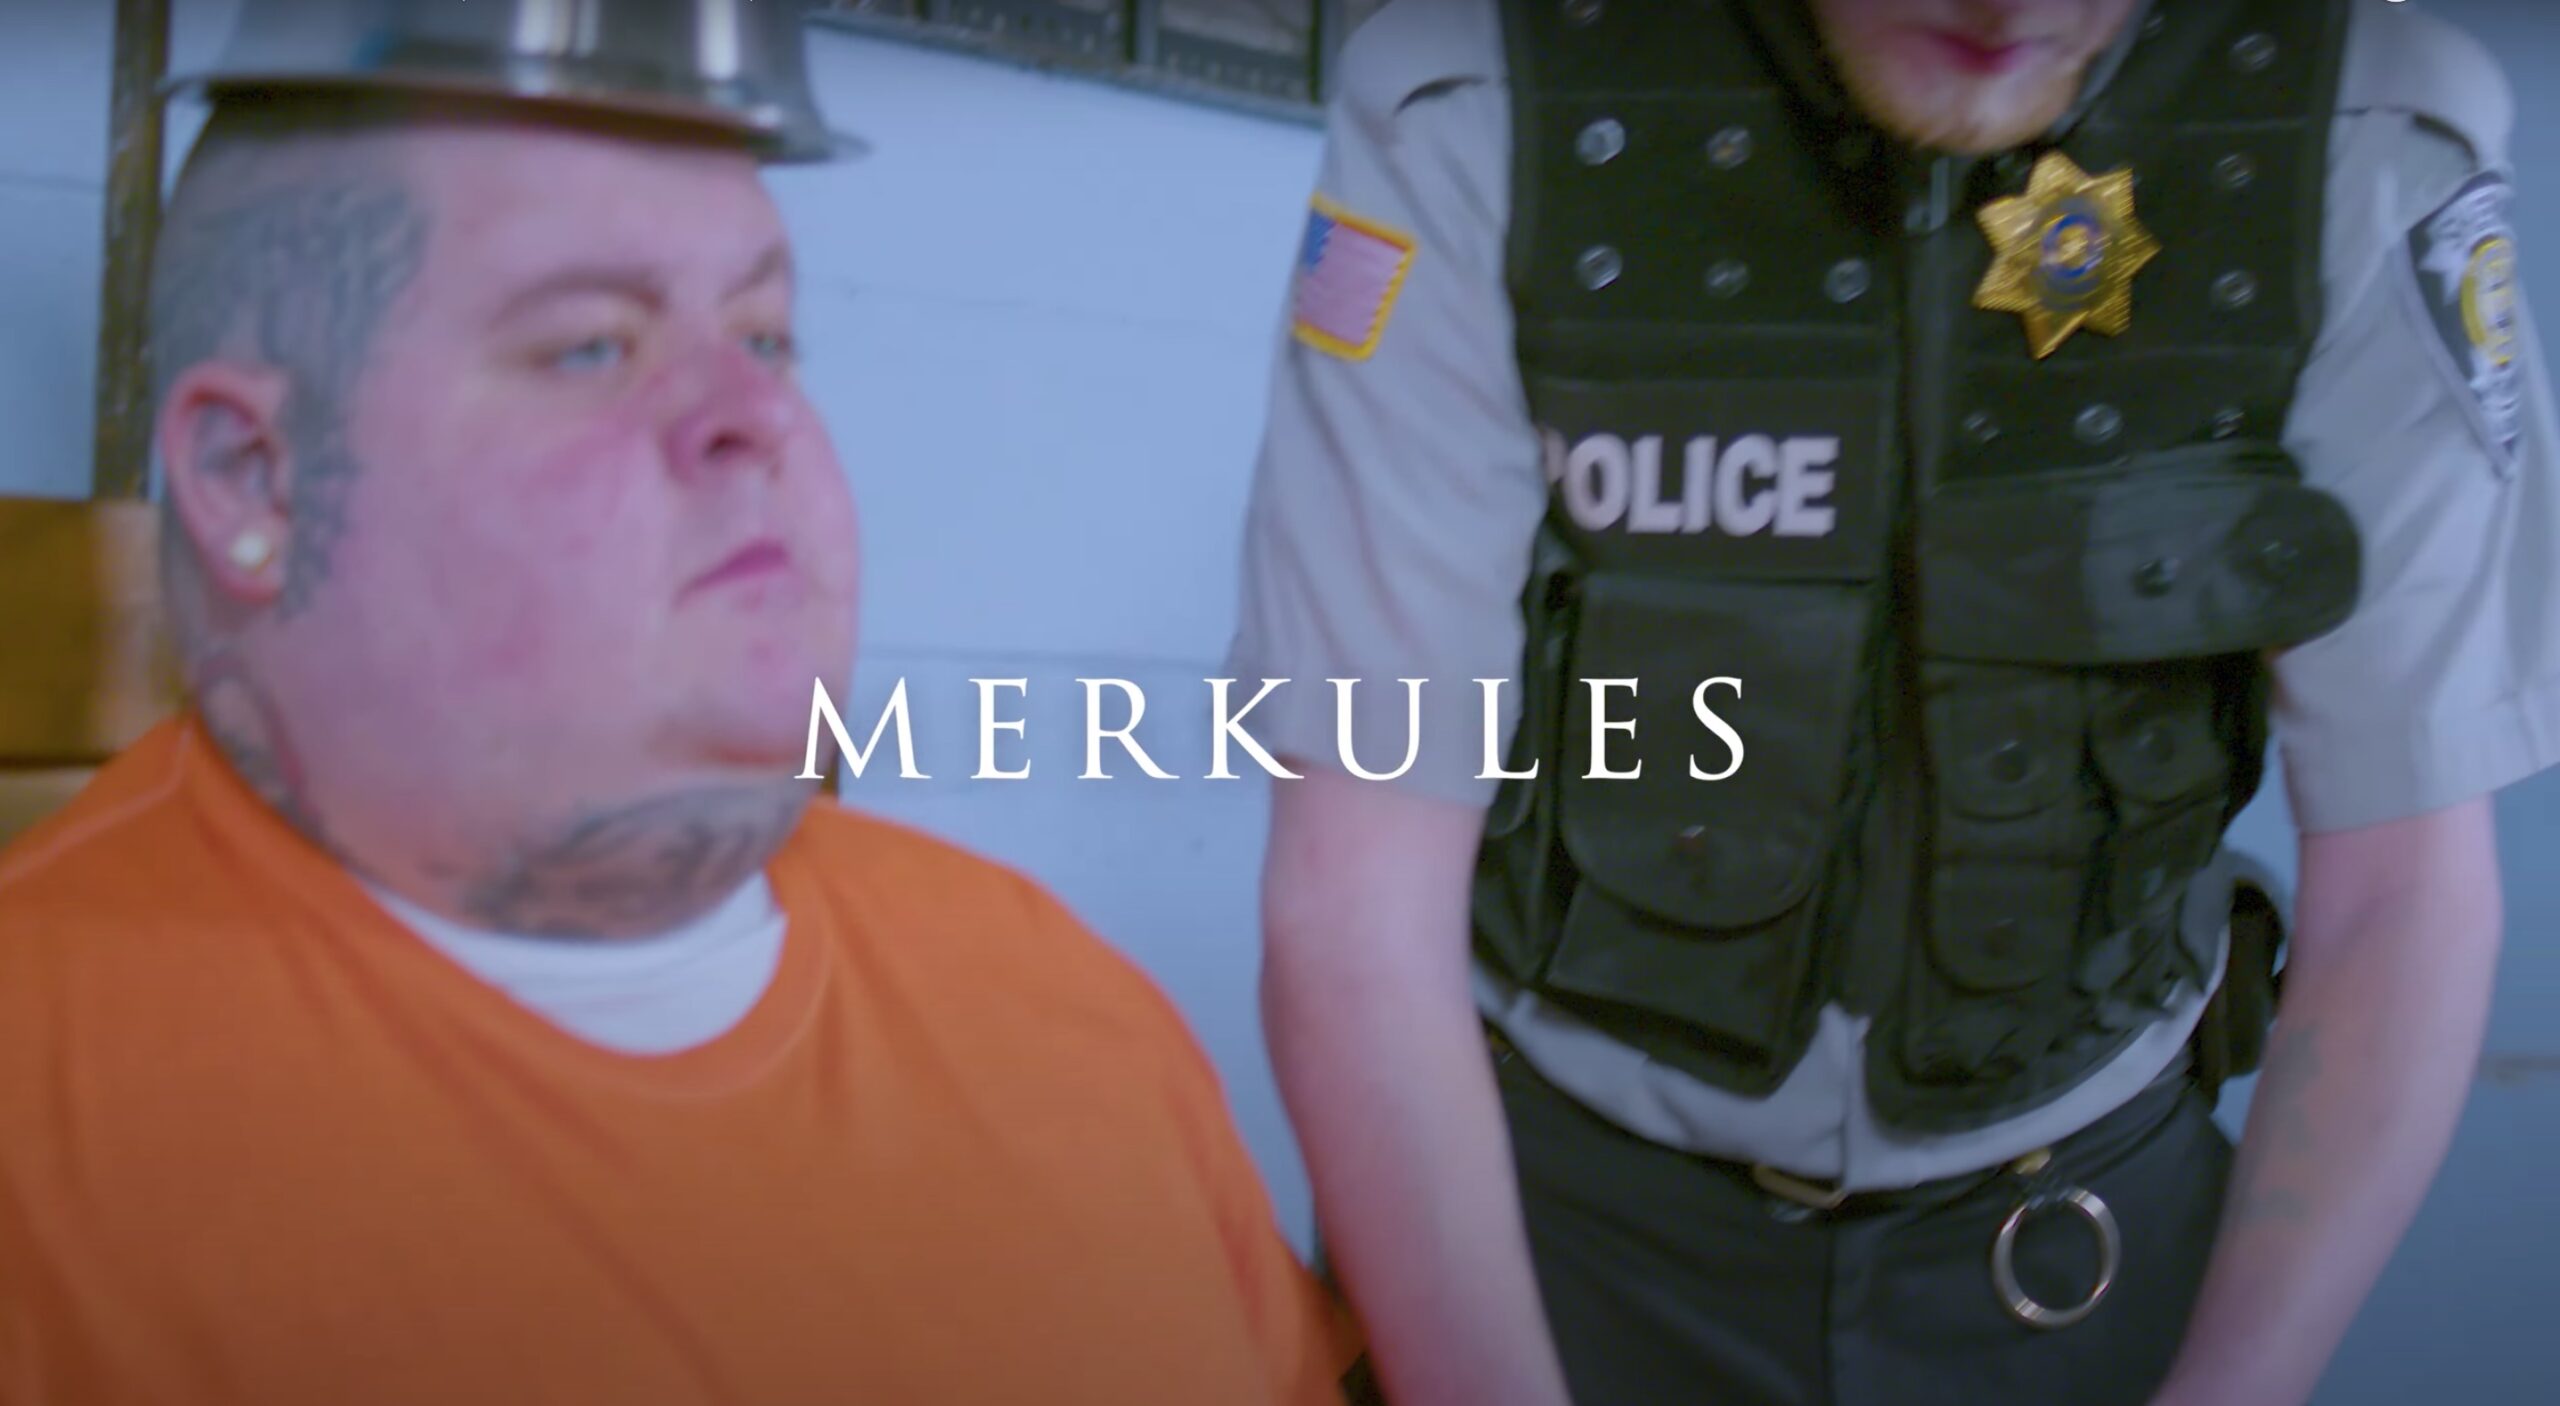 Merkules Death Row